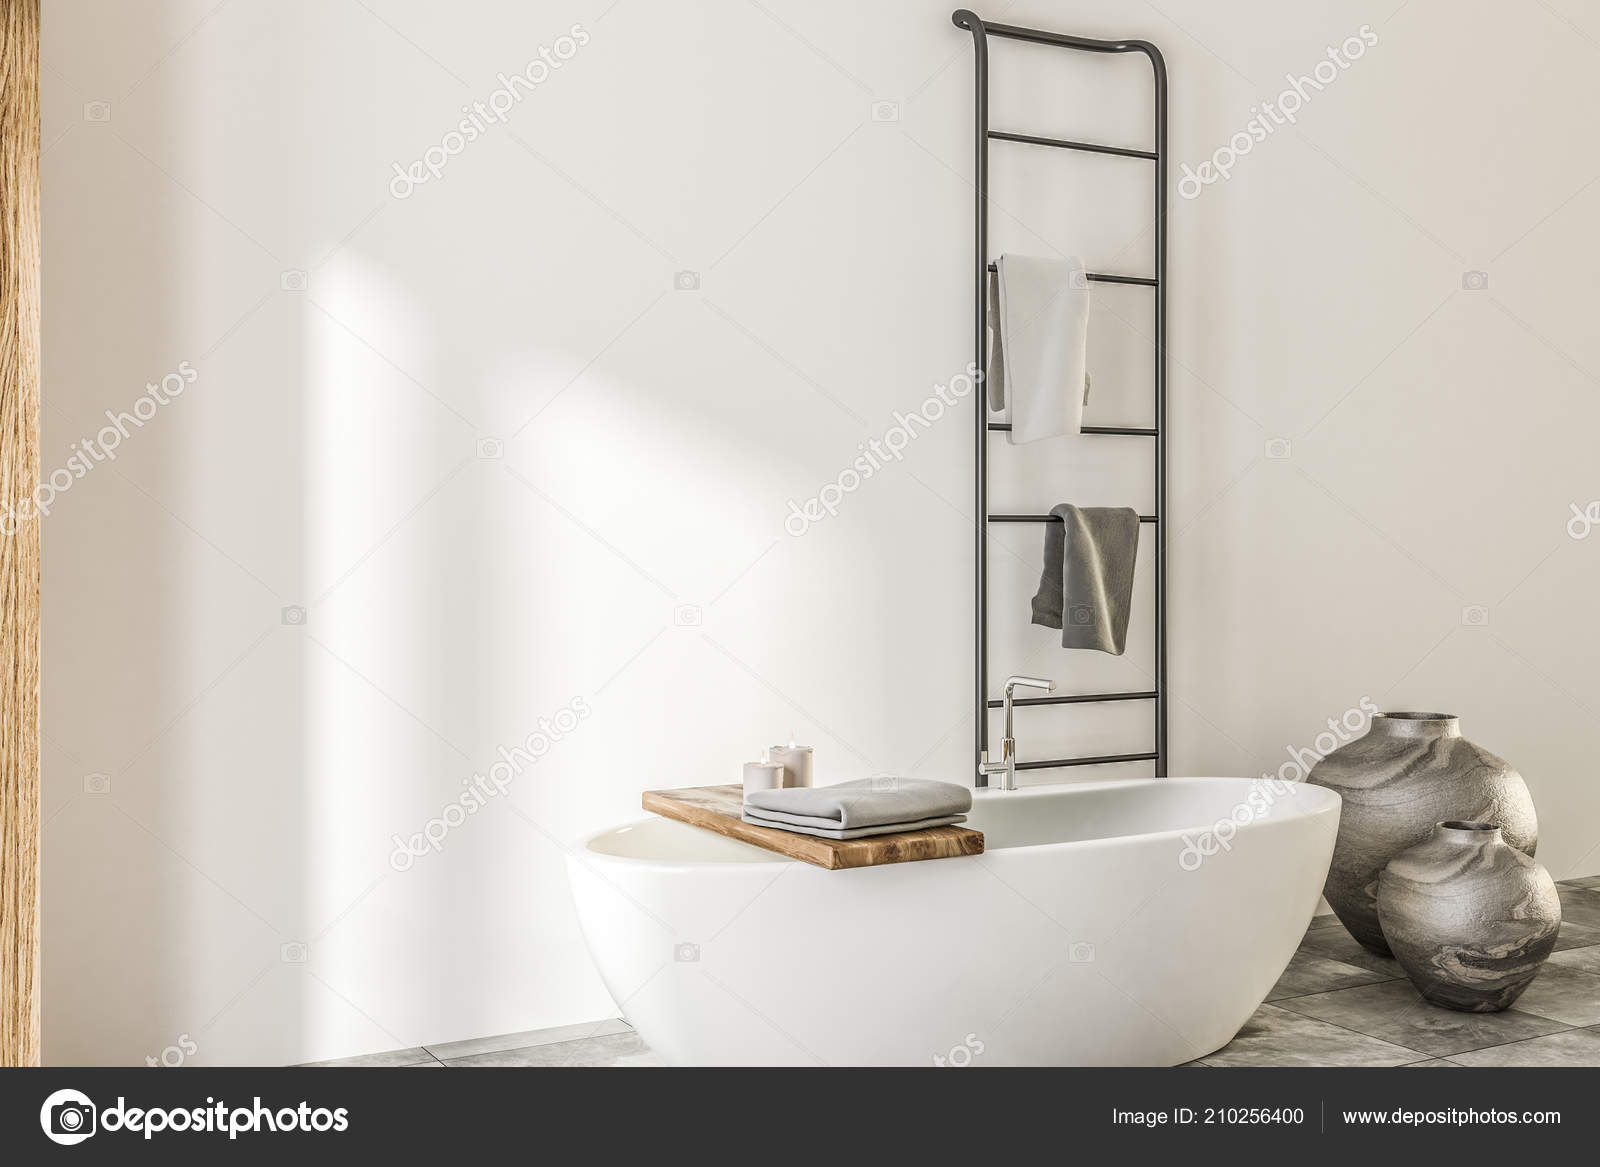 https://st4.depositphotos.com/2673929/21025/i/1600/depositphotos_210256400-stock-photo-white-wood-wall-bathroom-corner.jpg